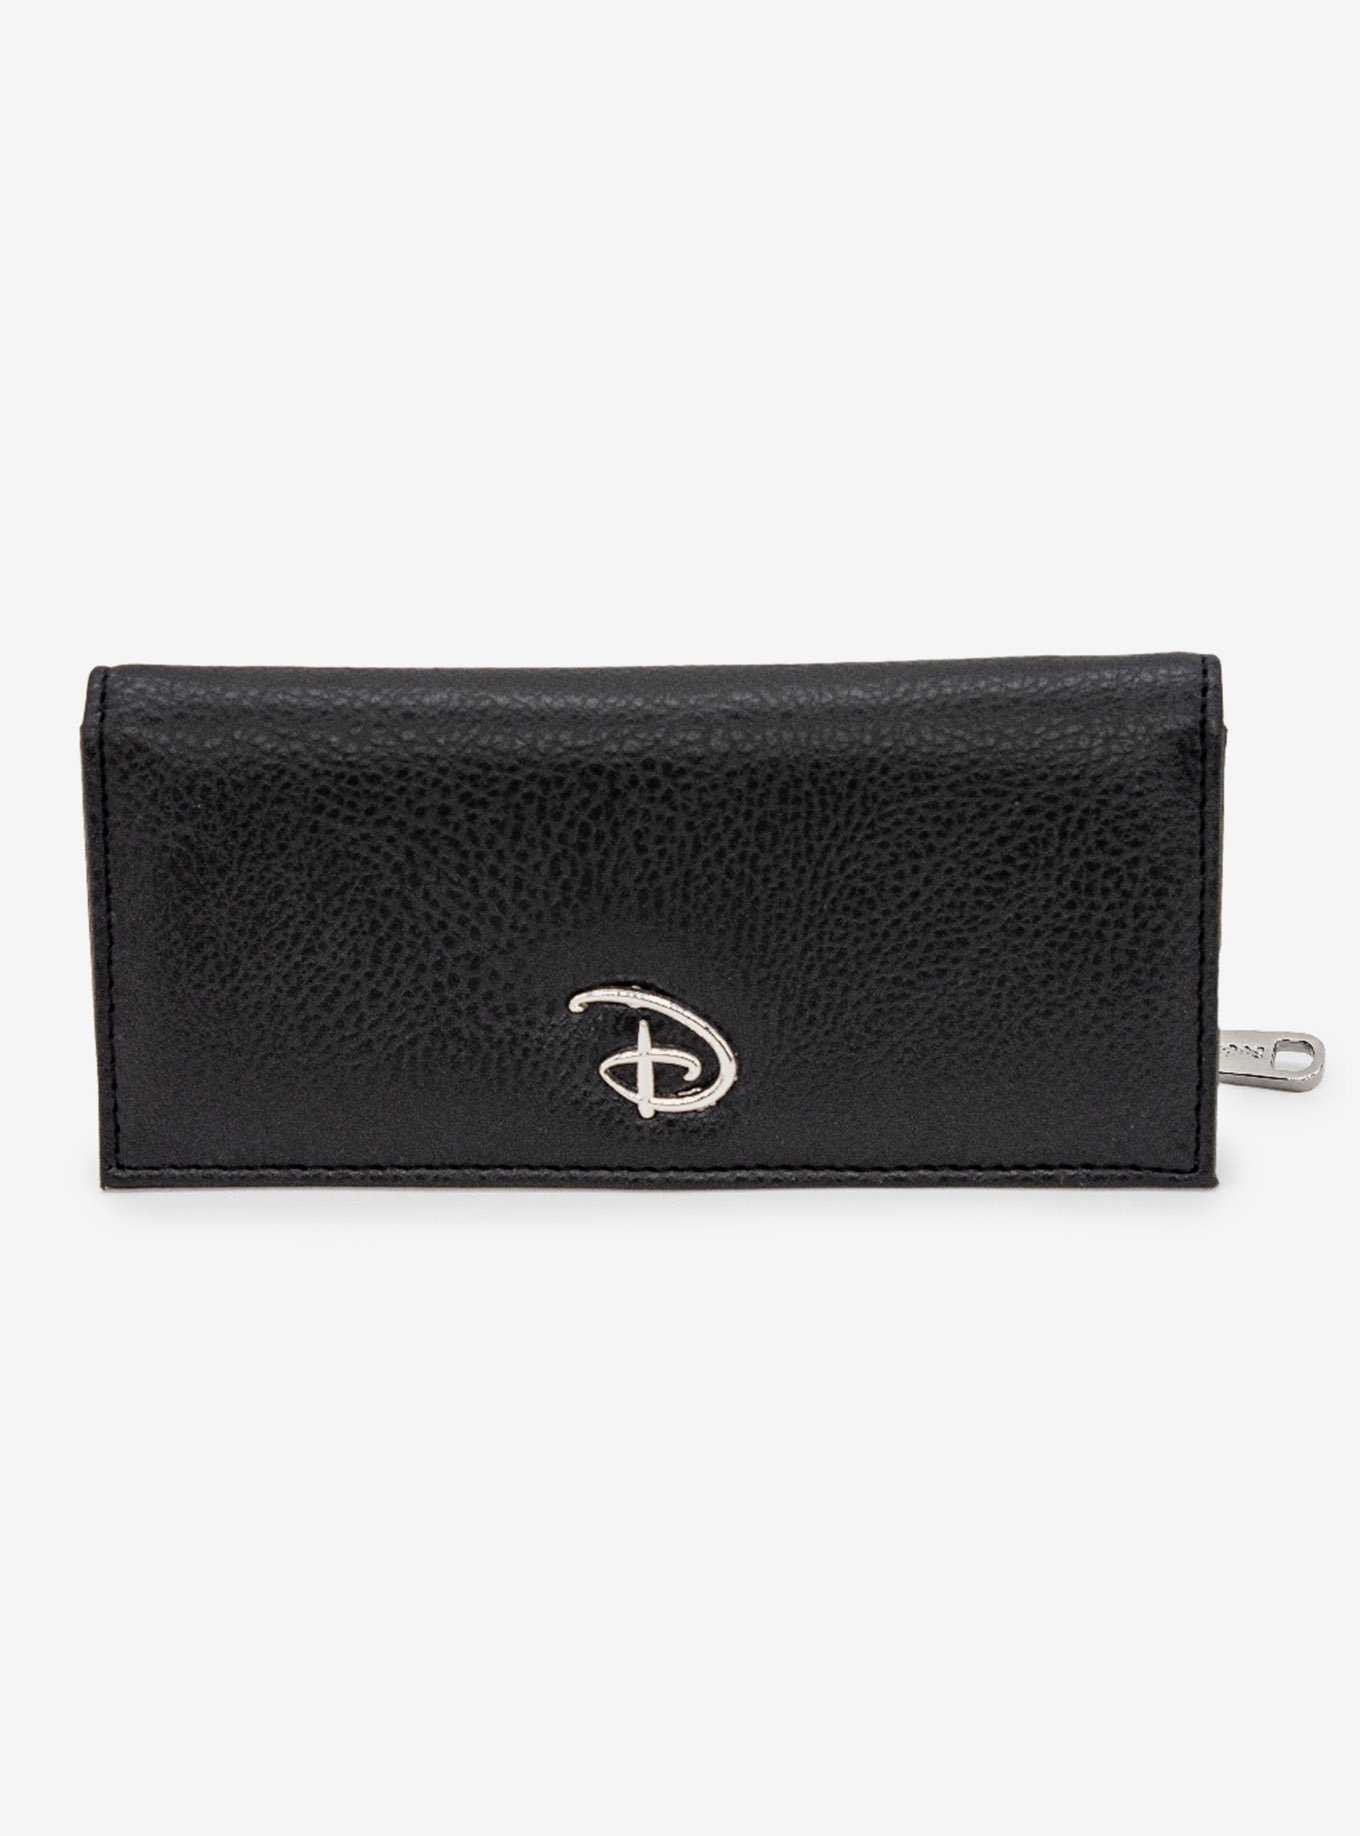 Disney Signature D Logo Snap Pouch Foldover Wallet, , hi-res